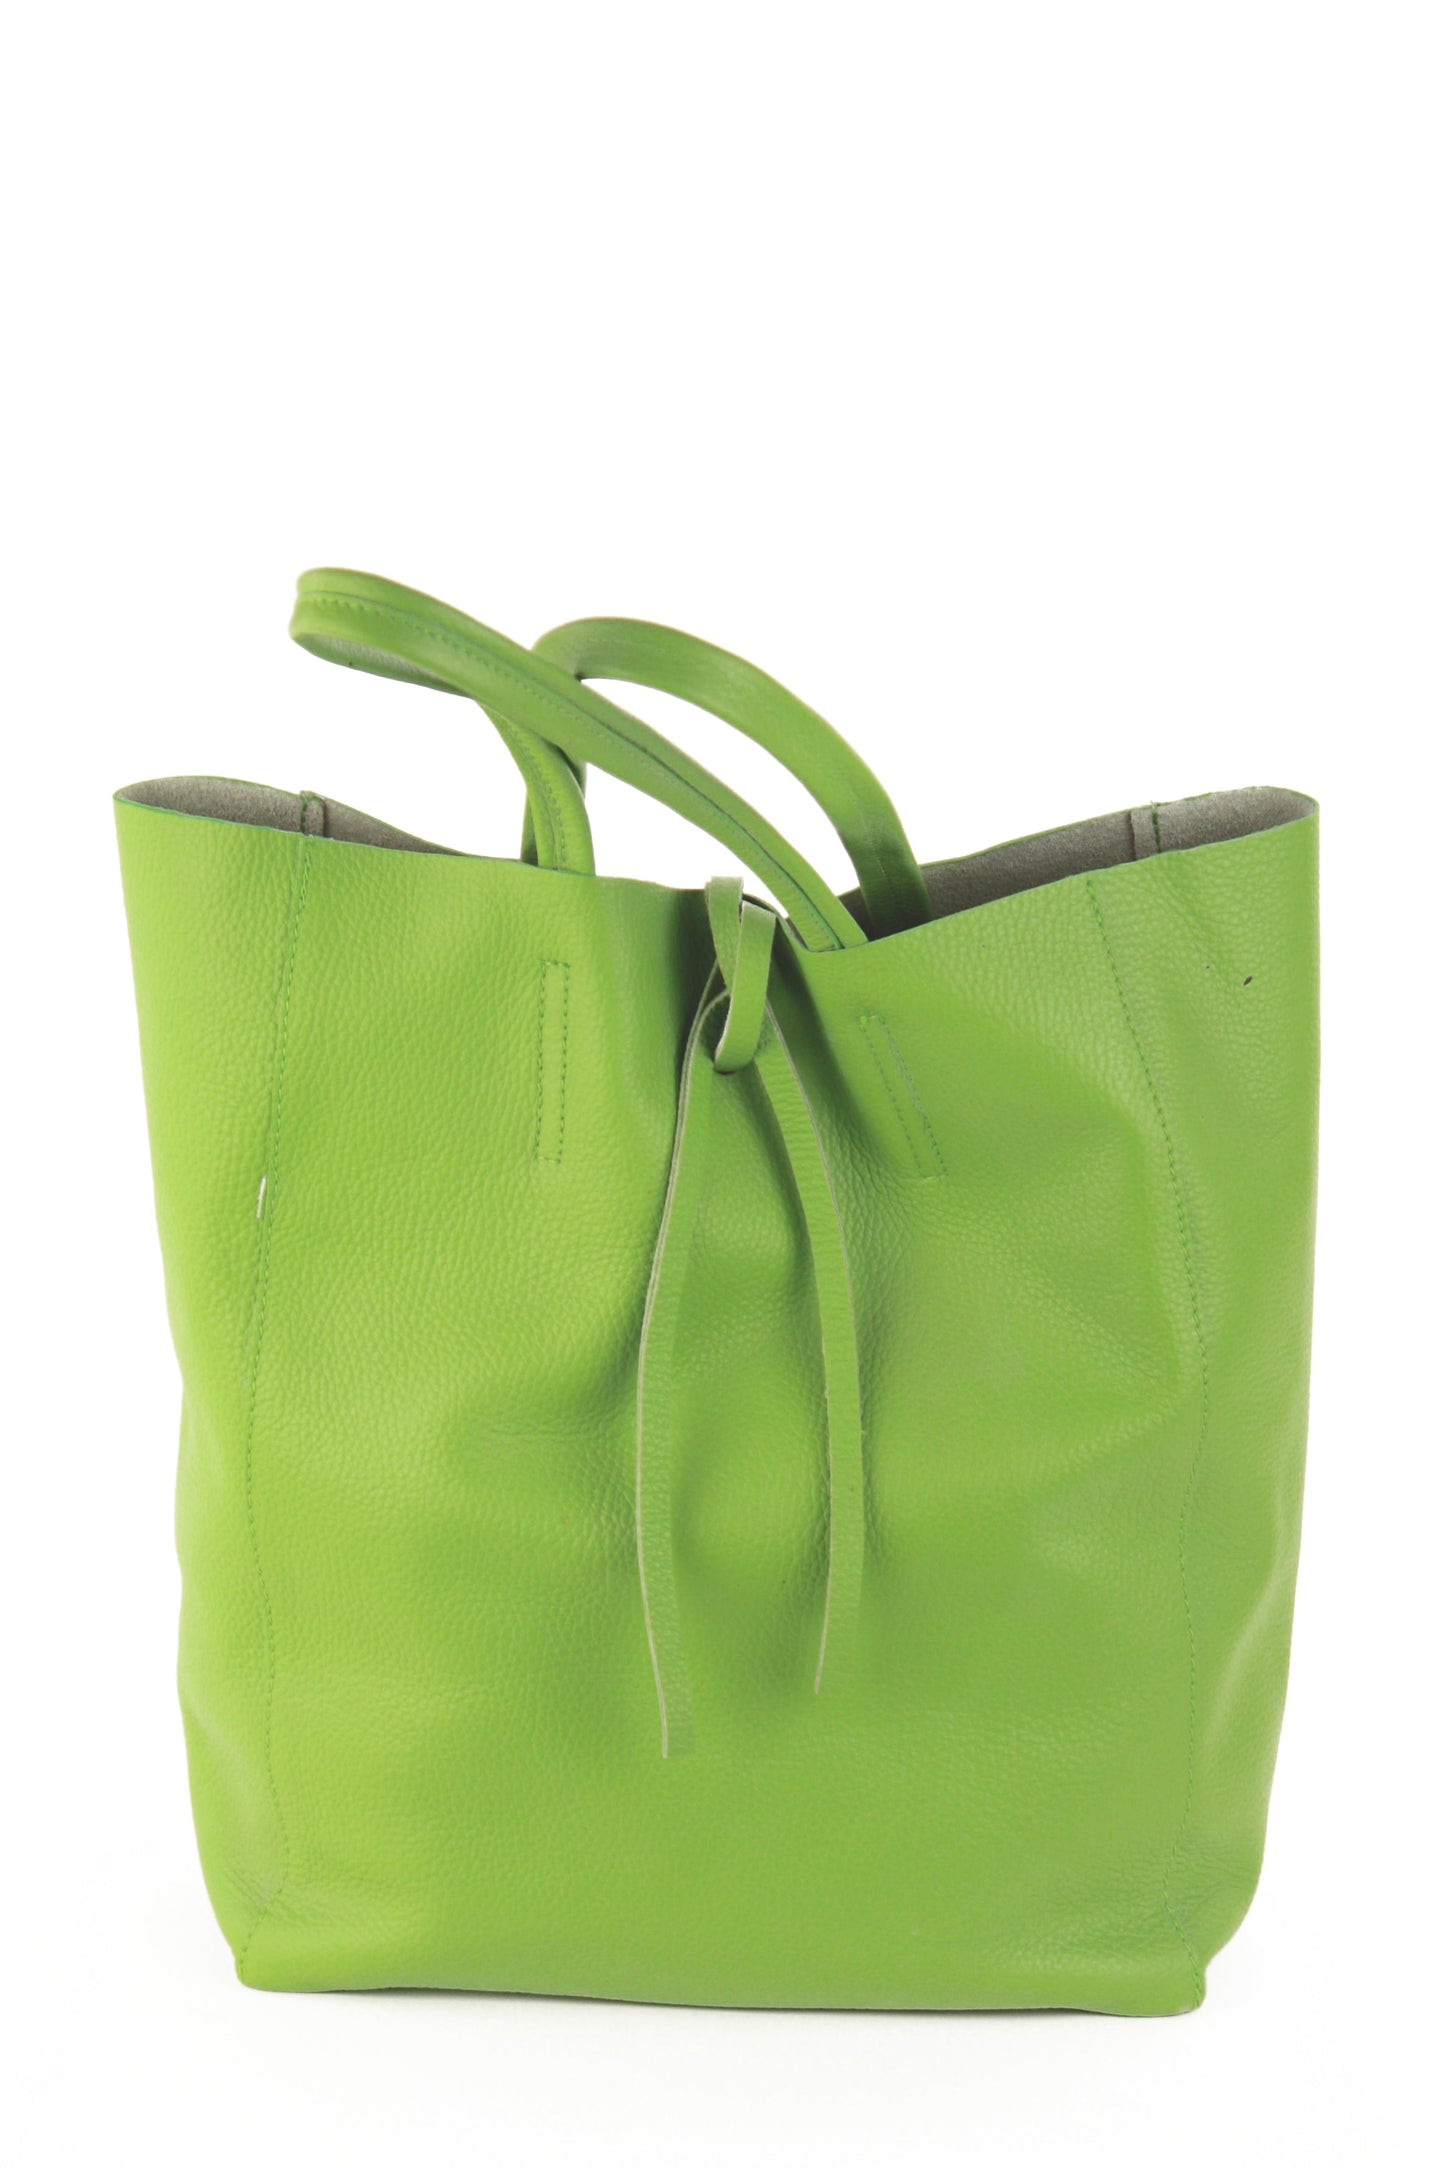 Babila shopping tote in bright green